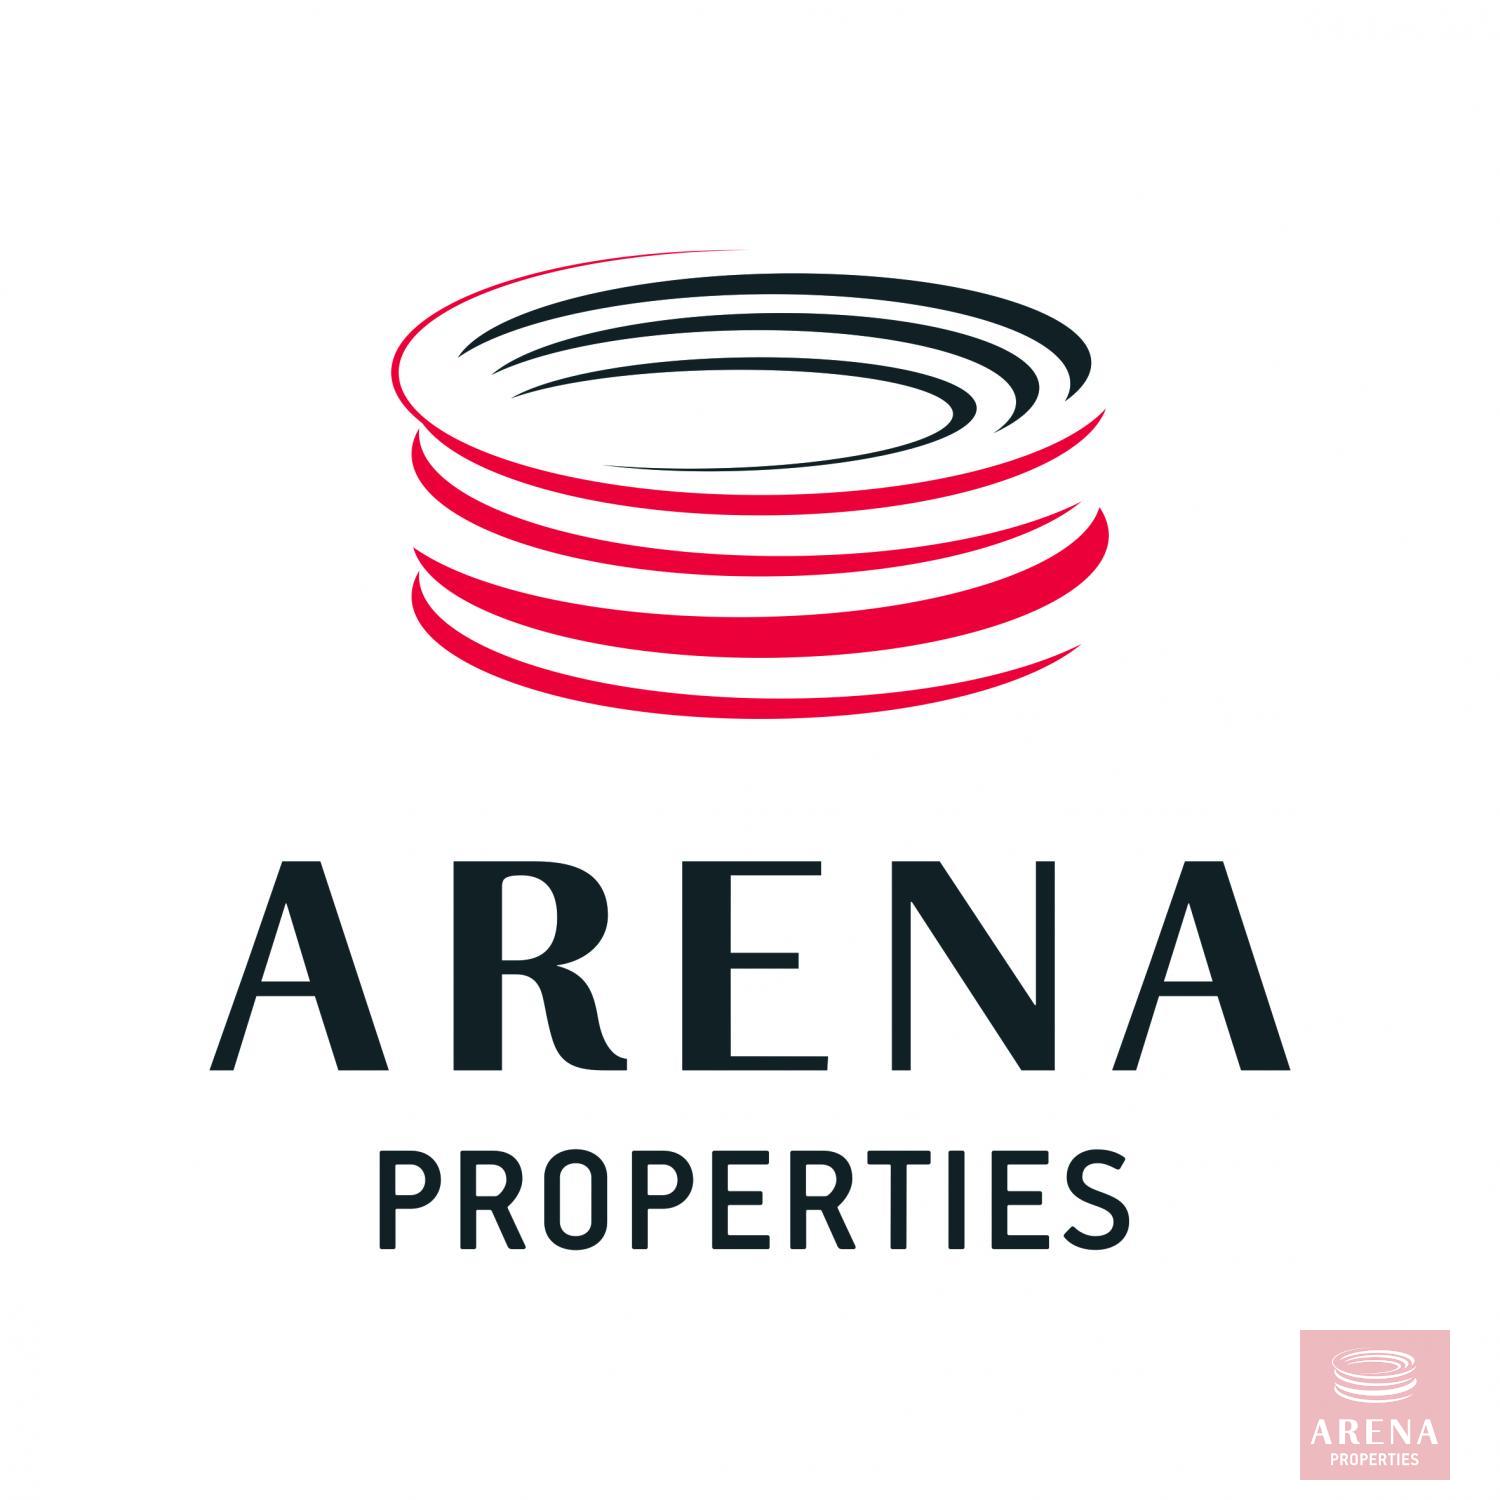 arena properties logo white 11